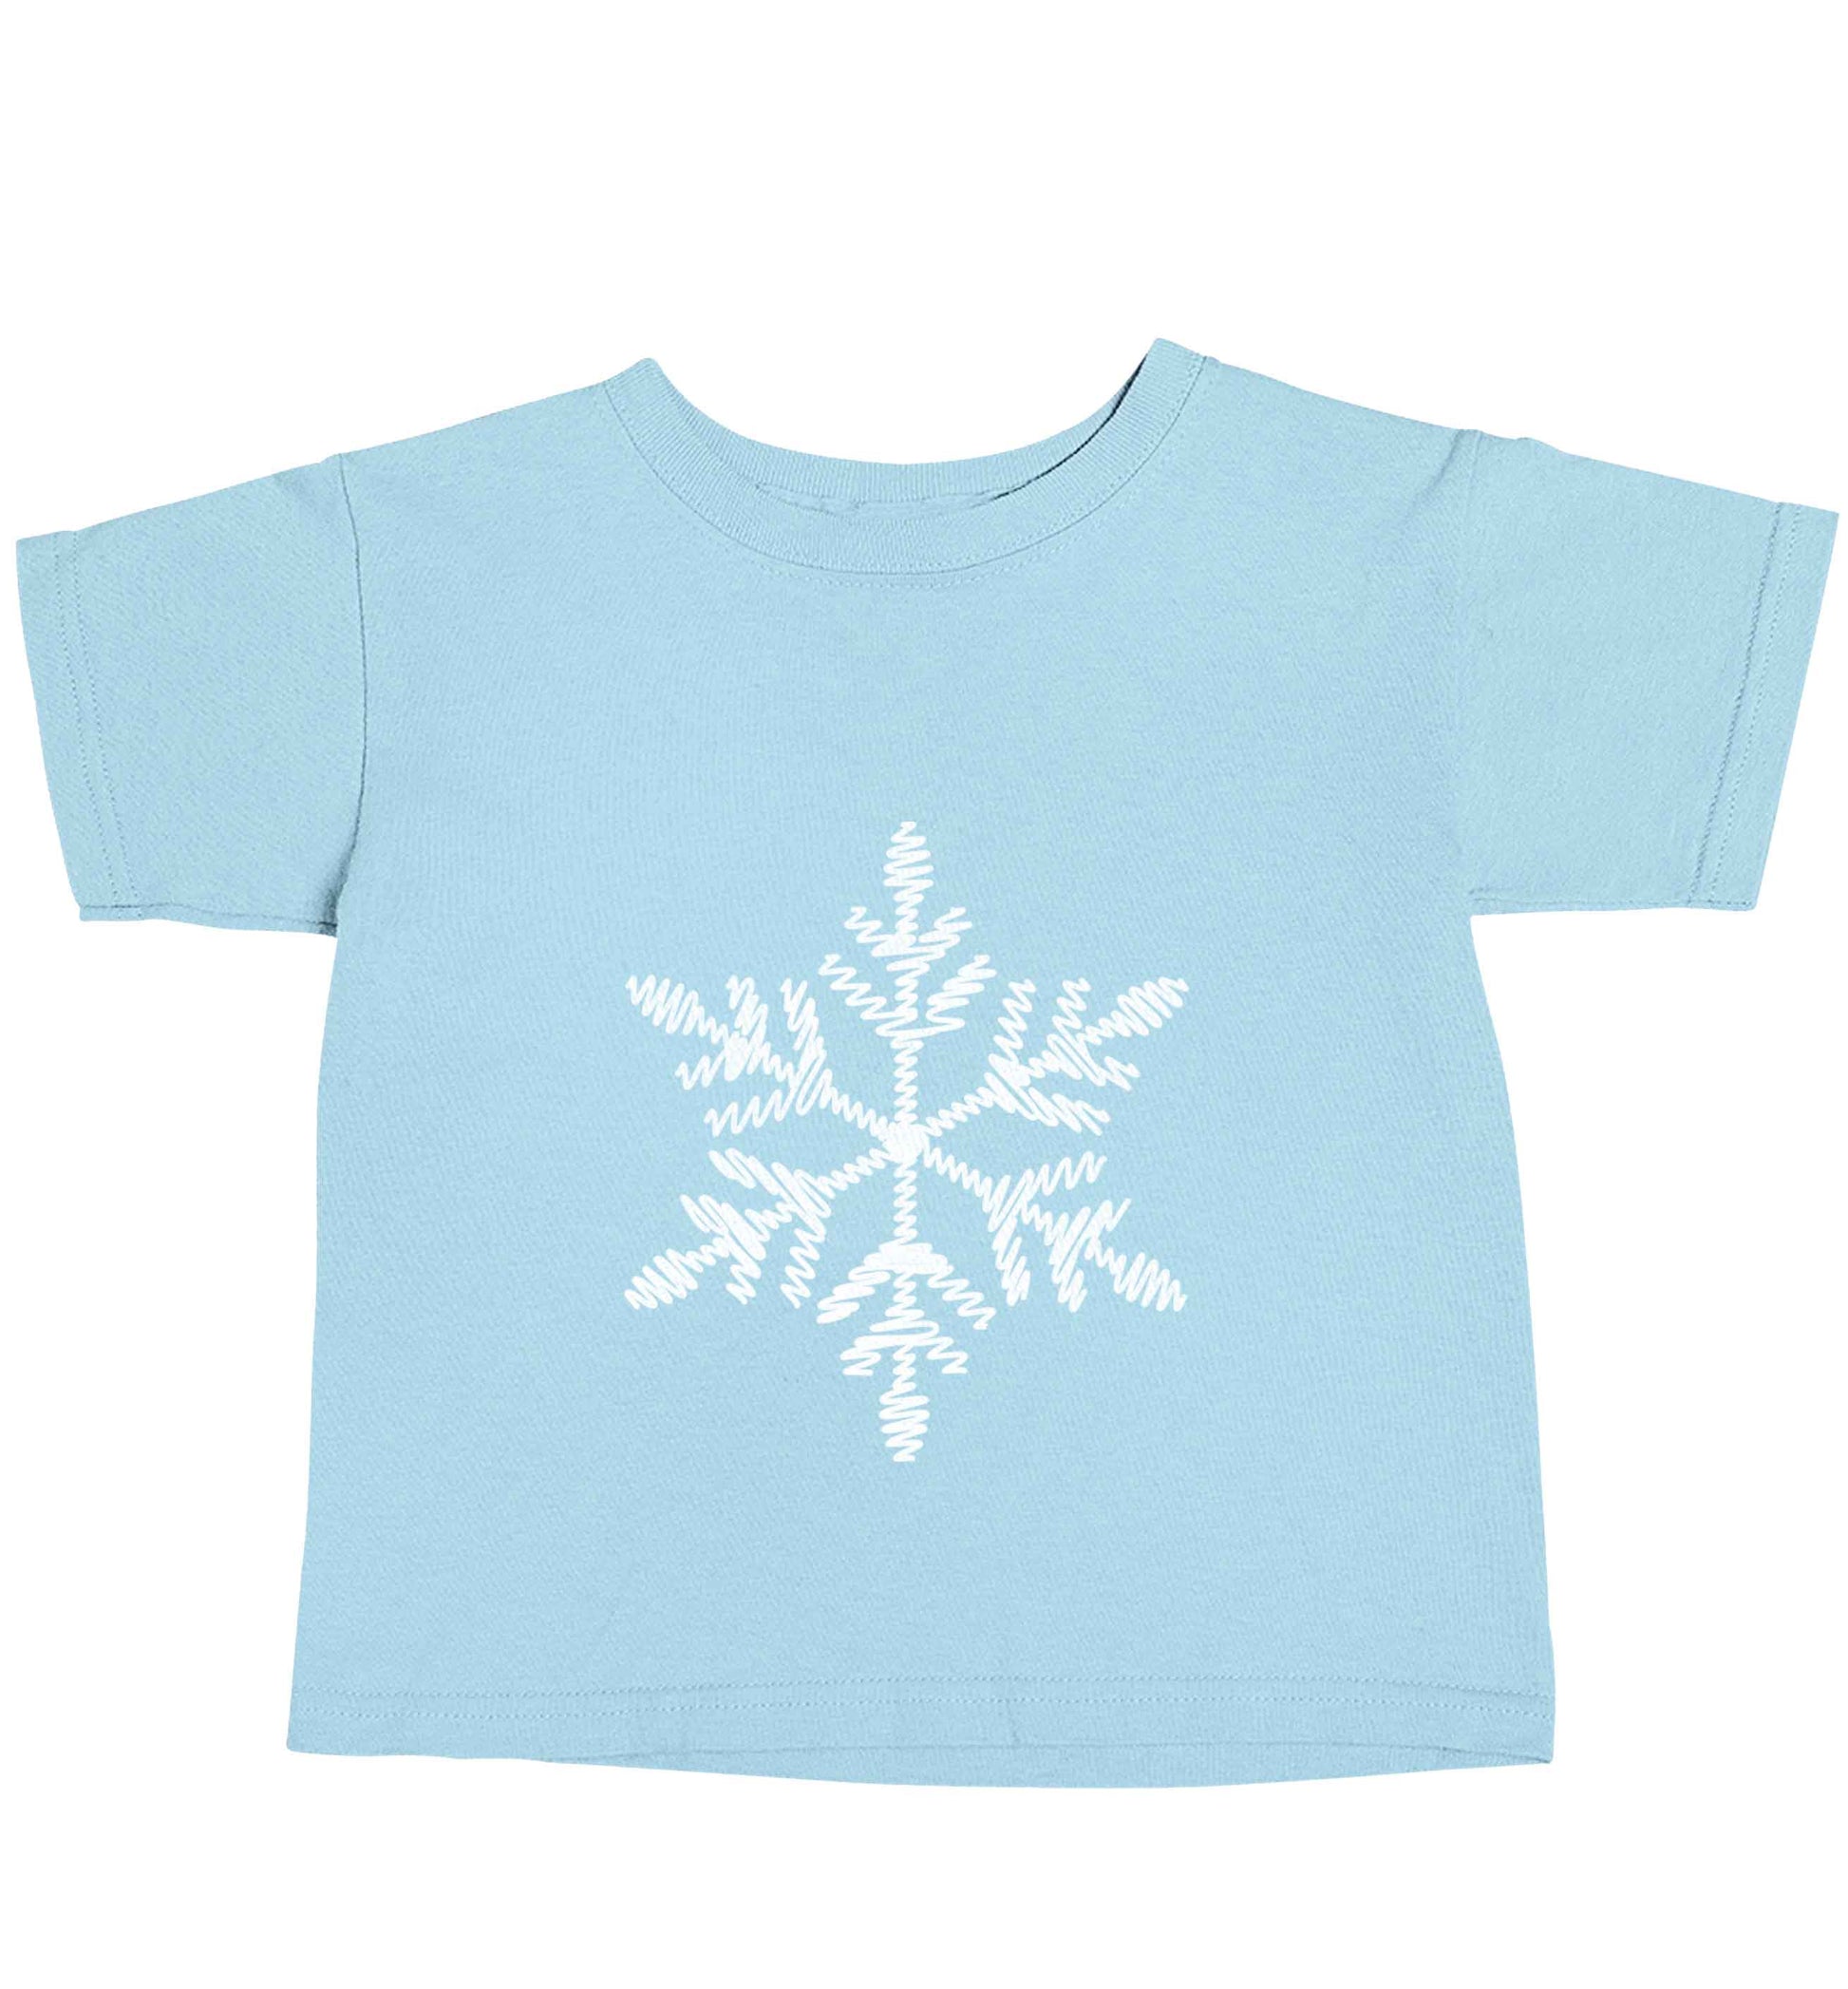 Snowflake light blue baby toddler Tshirt 2 Years